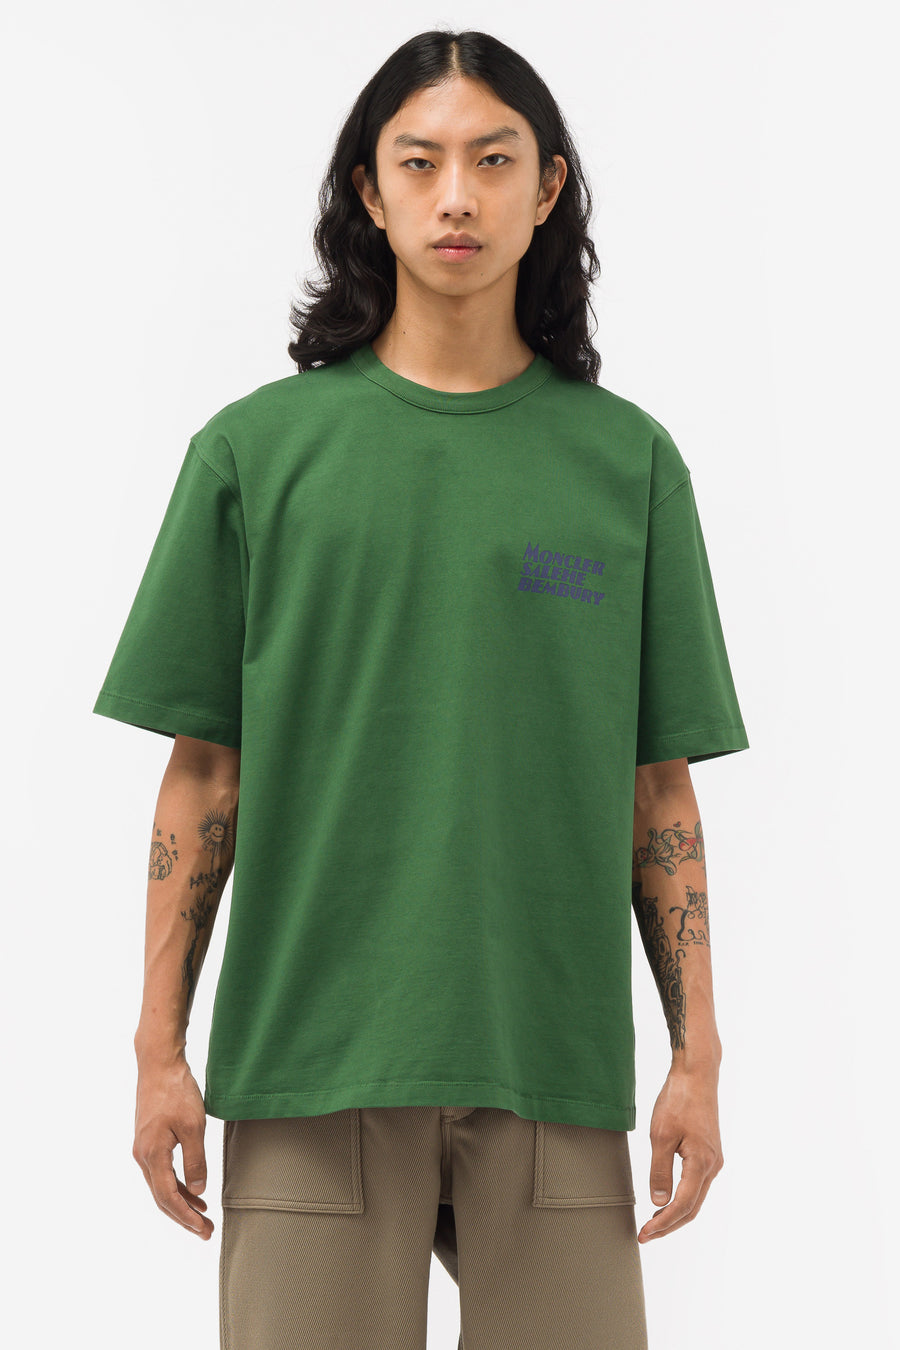 Moncler x Salehe Bembury T-Shirt in Green